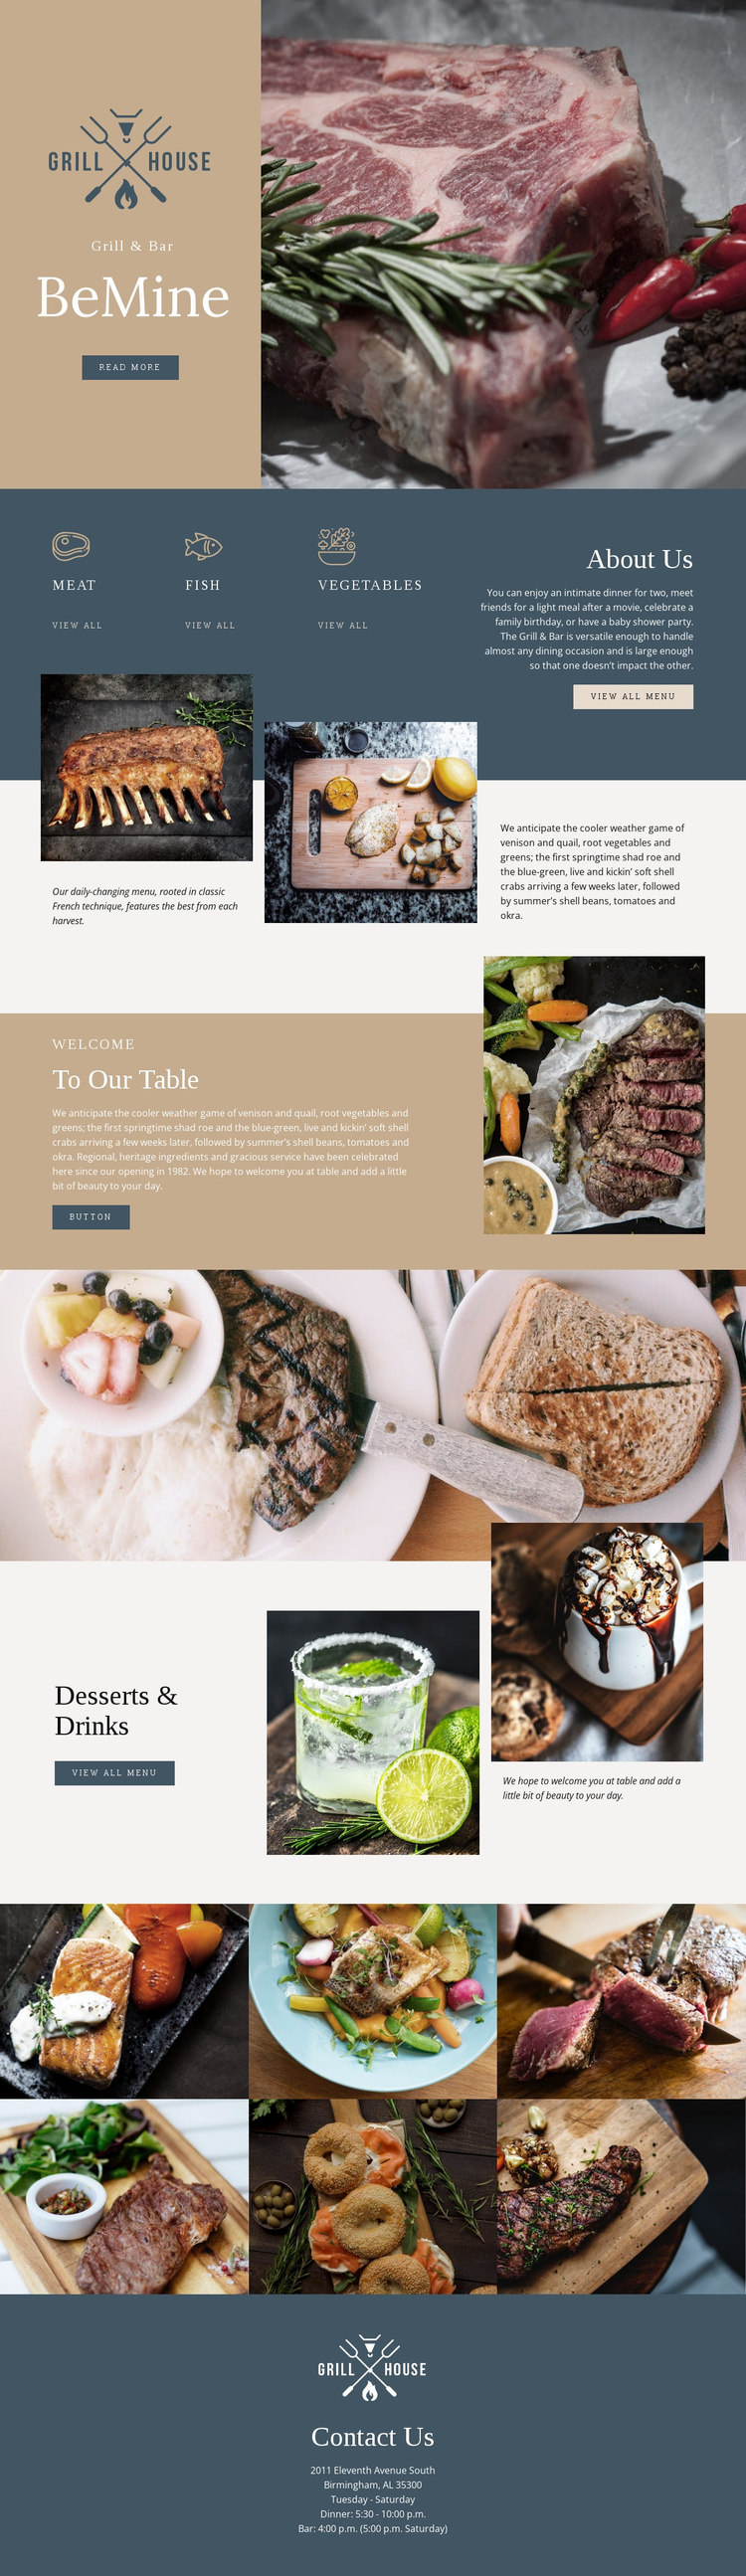 Finest grill house restaurant Website Template